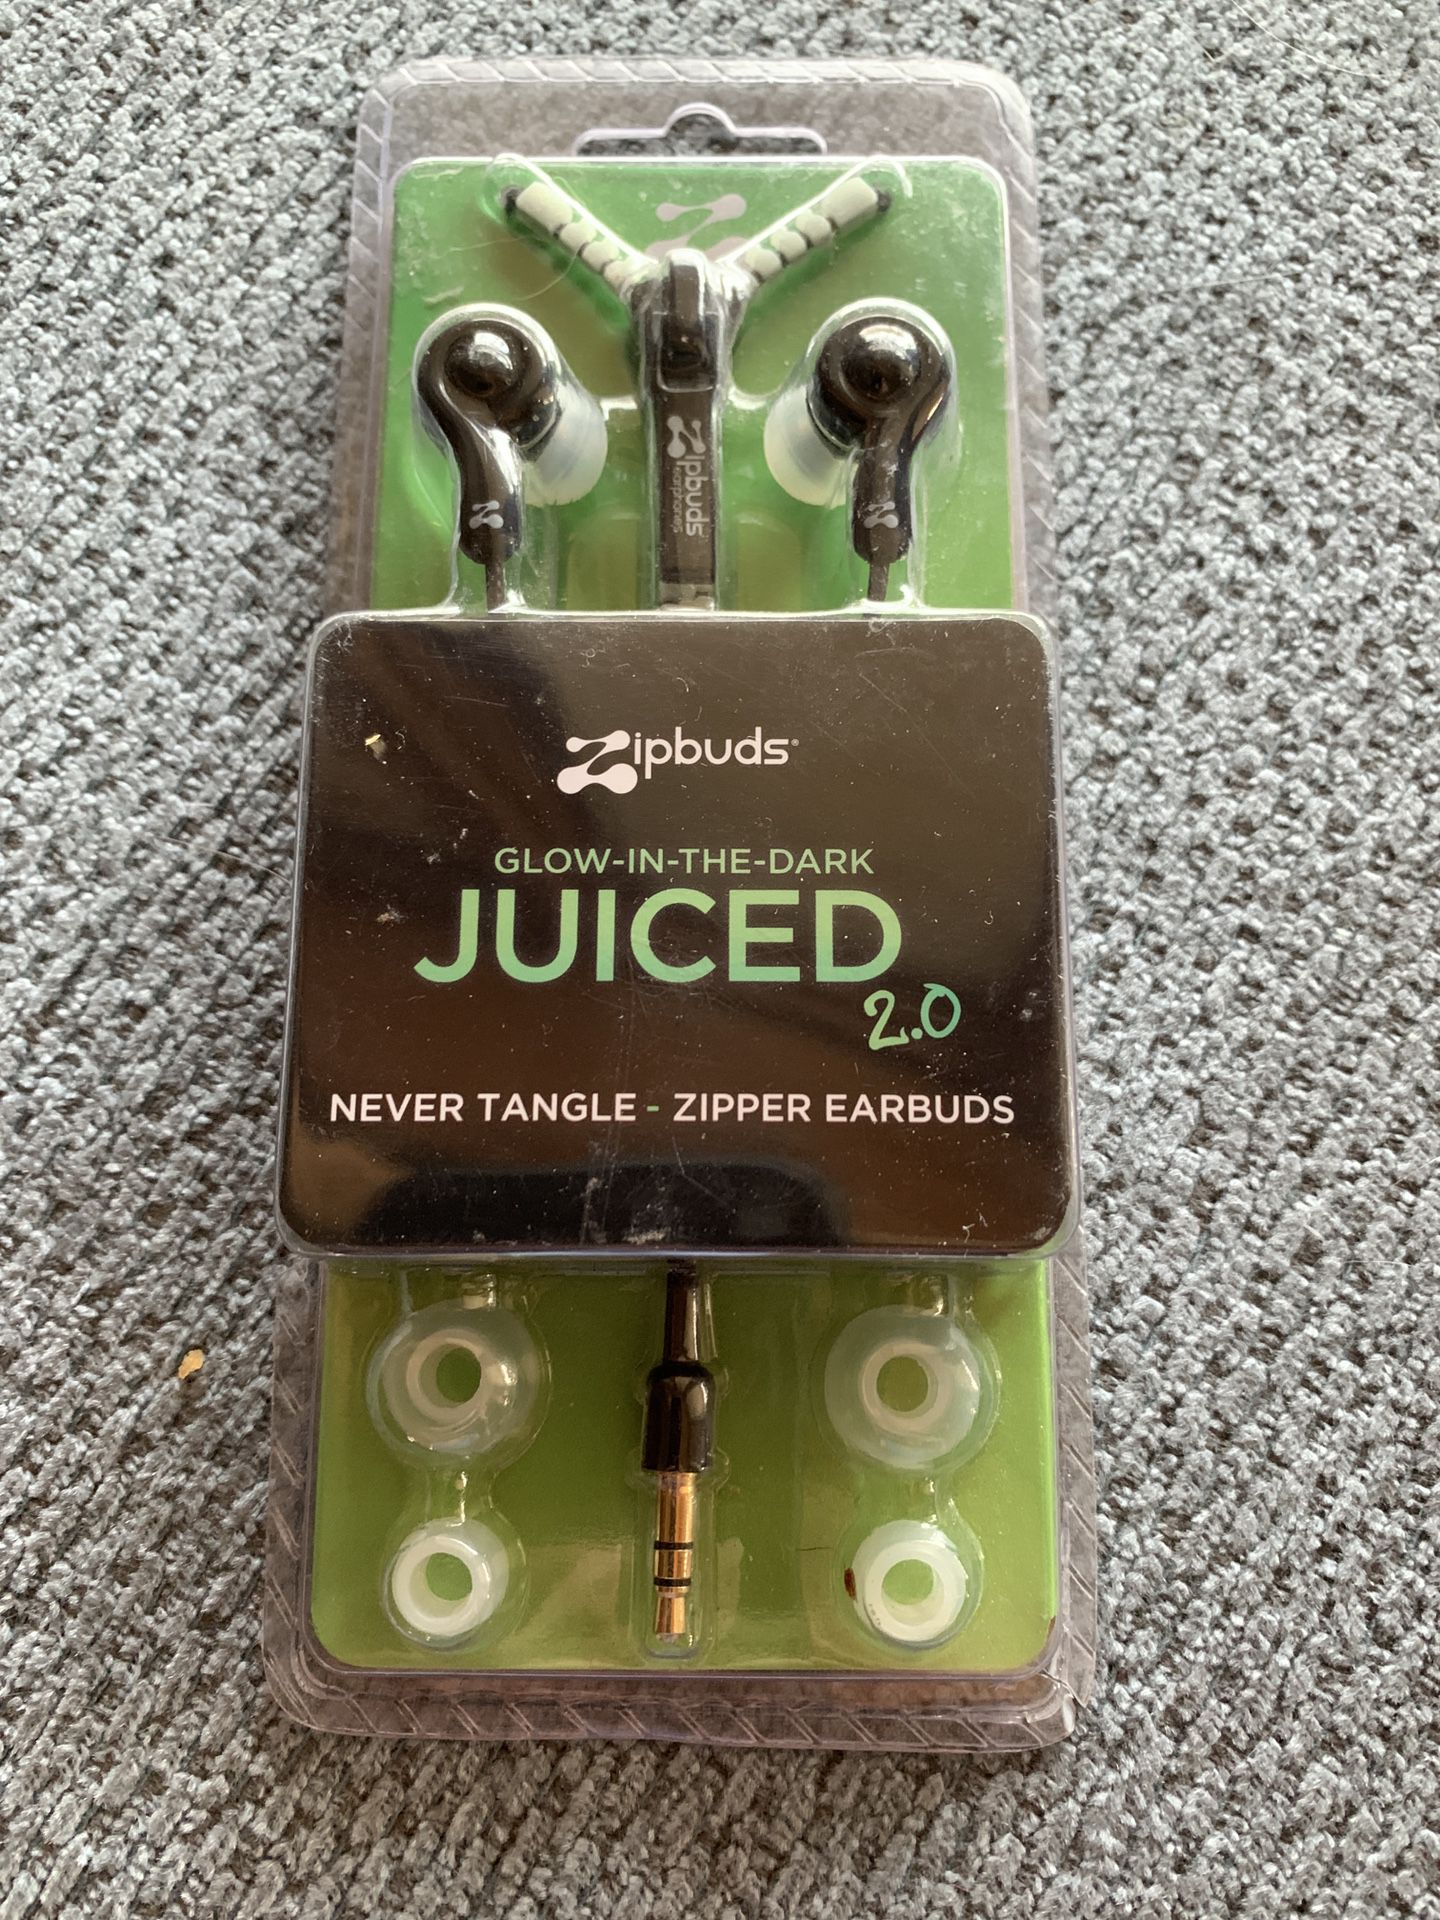 Juiced ipbuds Zipper Earbuds 